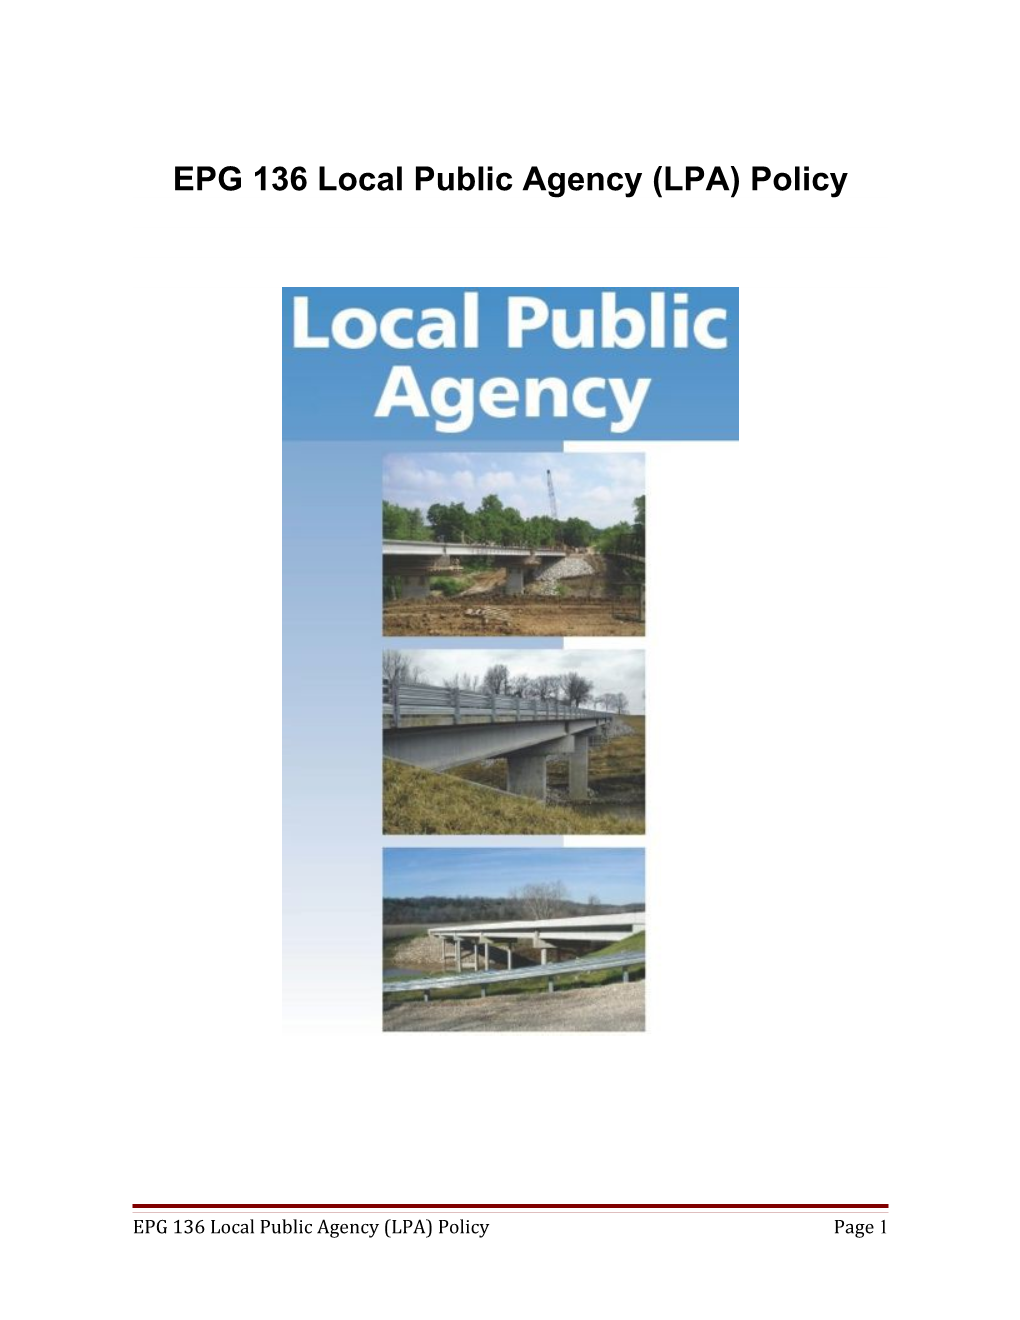 EPG 136 Local Public Agency (LPA) Policy